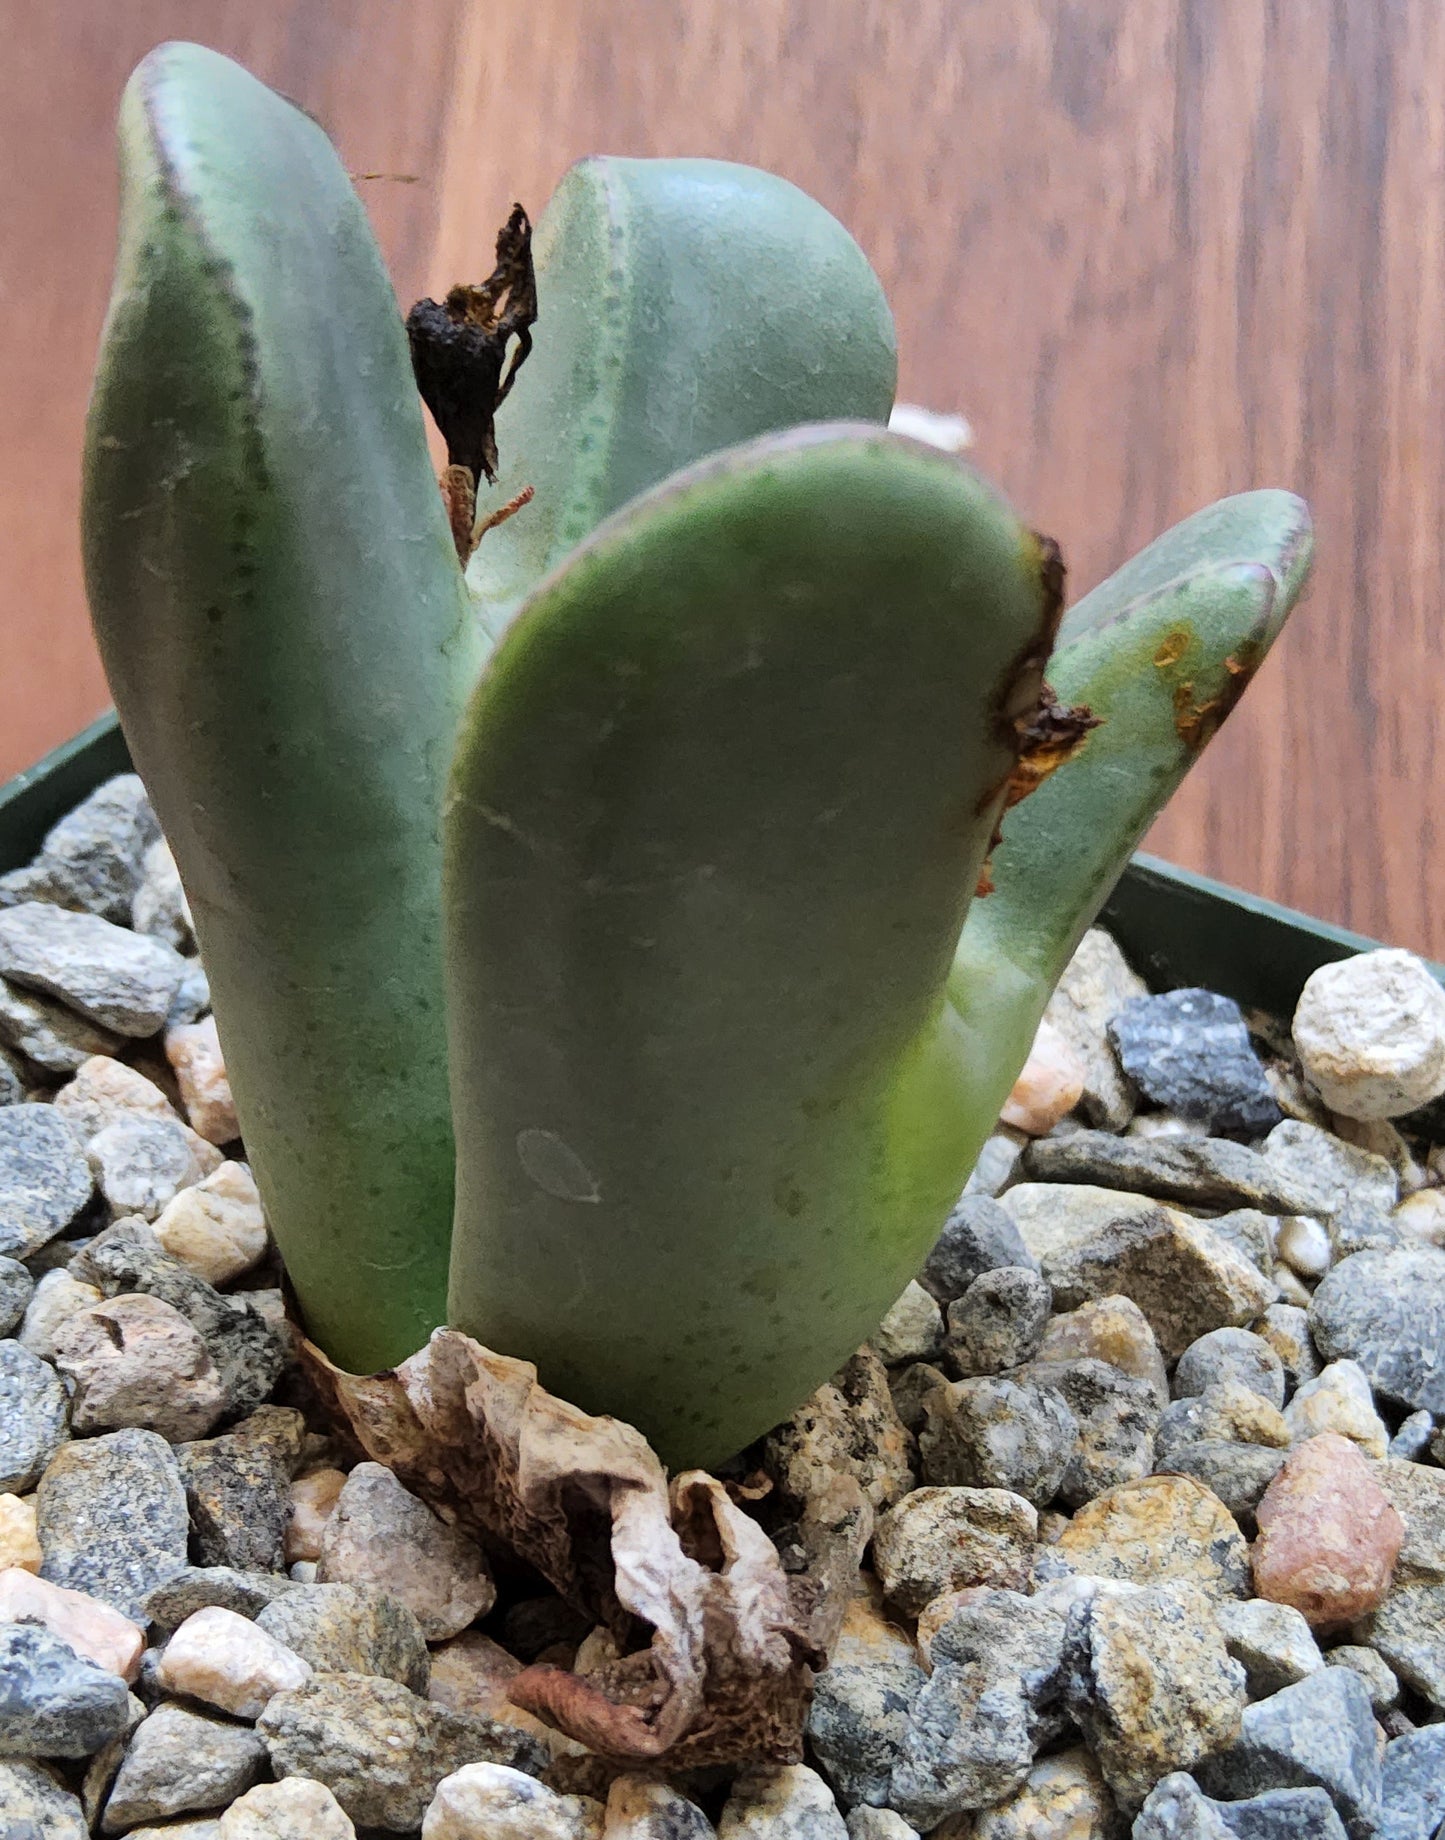 Conophytum bilobum Live Succulent Growing in 4 Inch